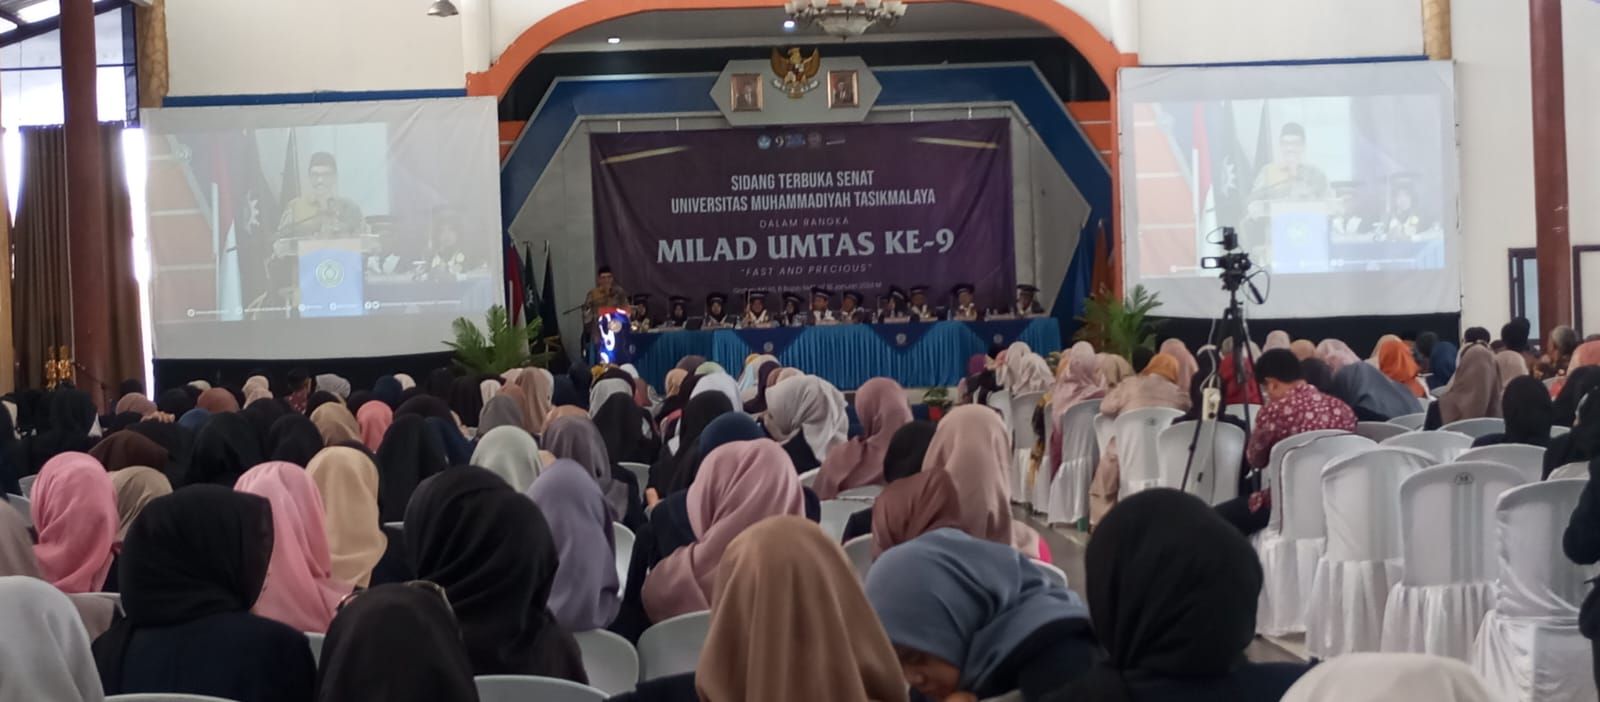 Ketua BPH Umtas Prof.Yadi memberi arahan pada acara sidang terbuka senat Universitas Muhammadiyah Tasikmalaya dalam rangka Milad Umtas ke 9.*